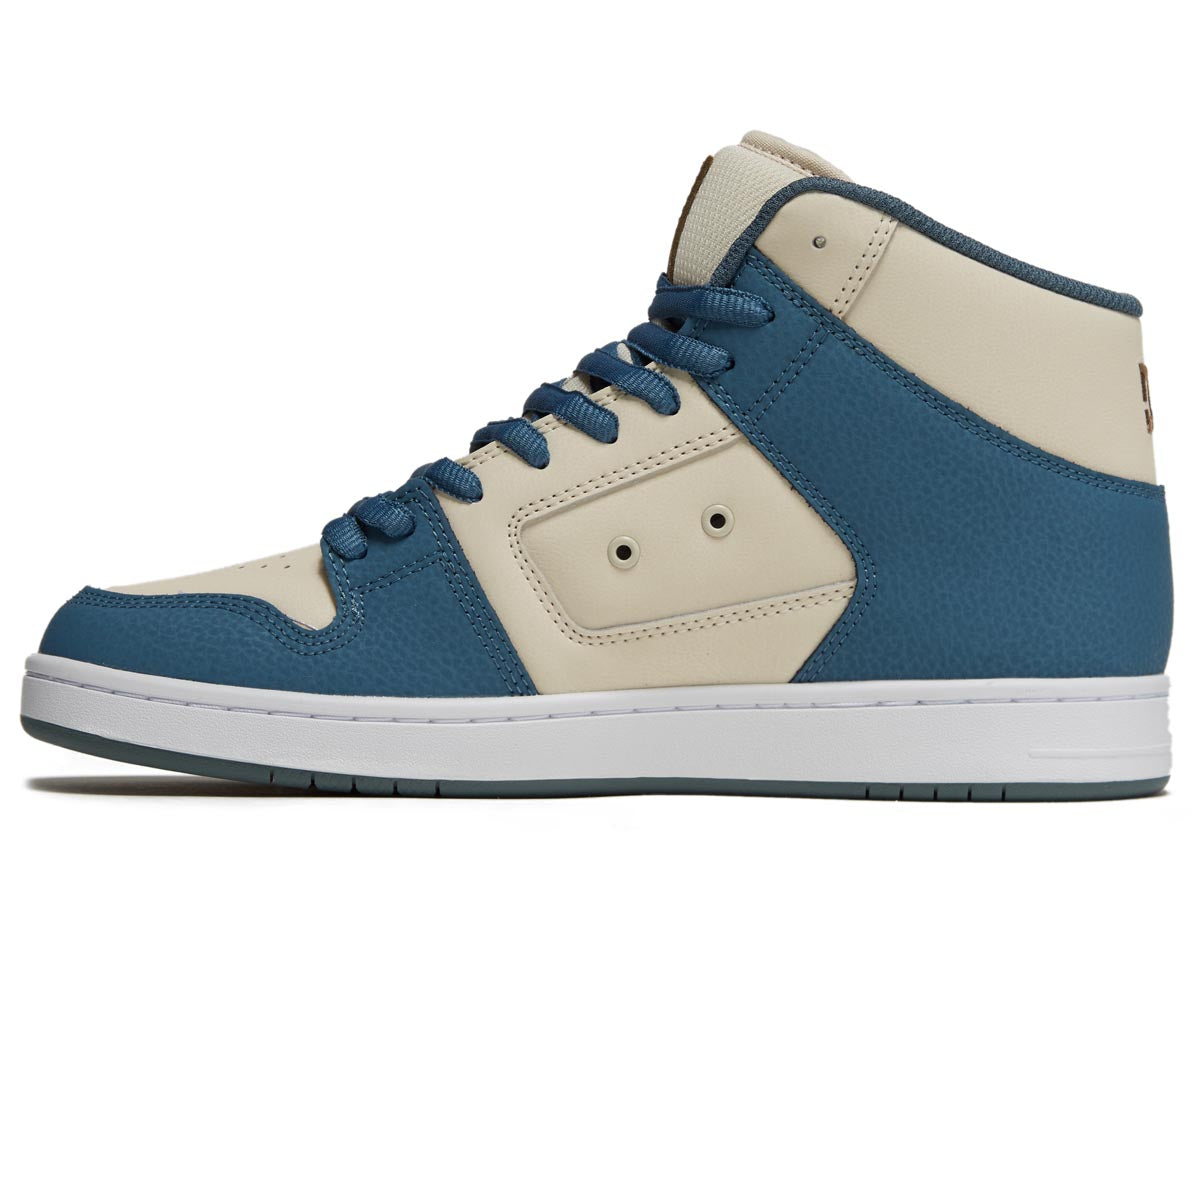 DC Manteca 4 Hi Shoes - Grey/Blue/White image 2